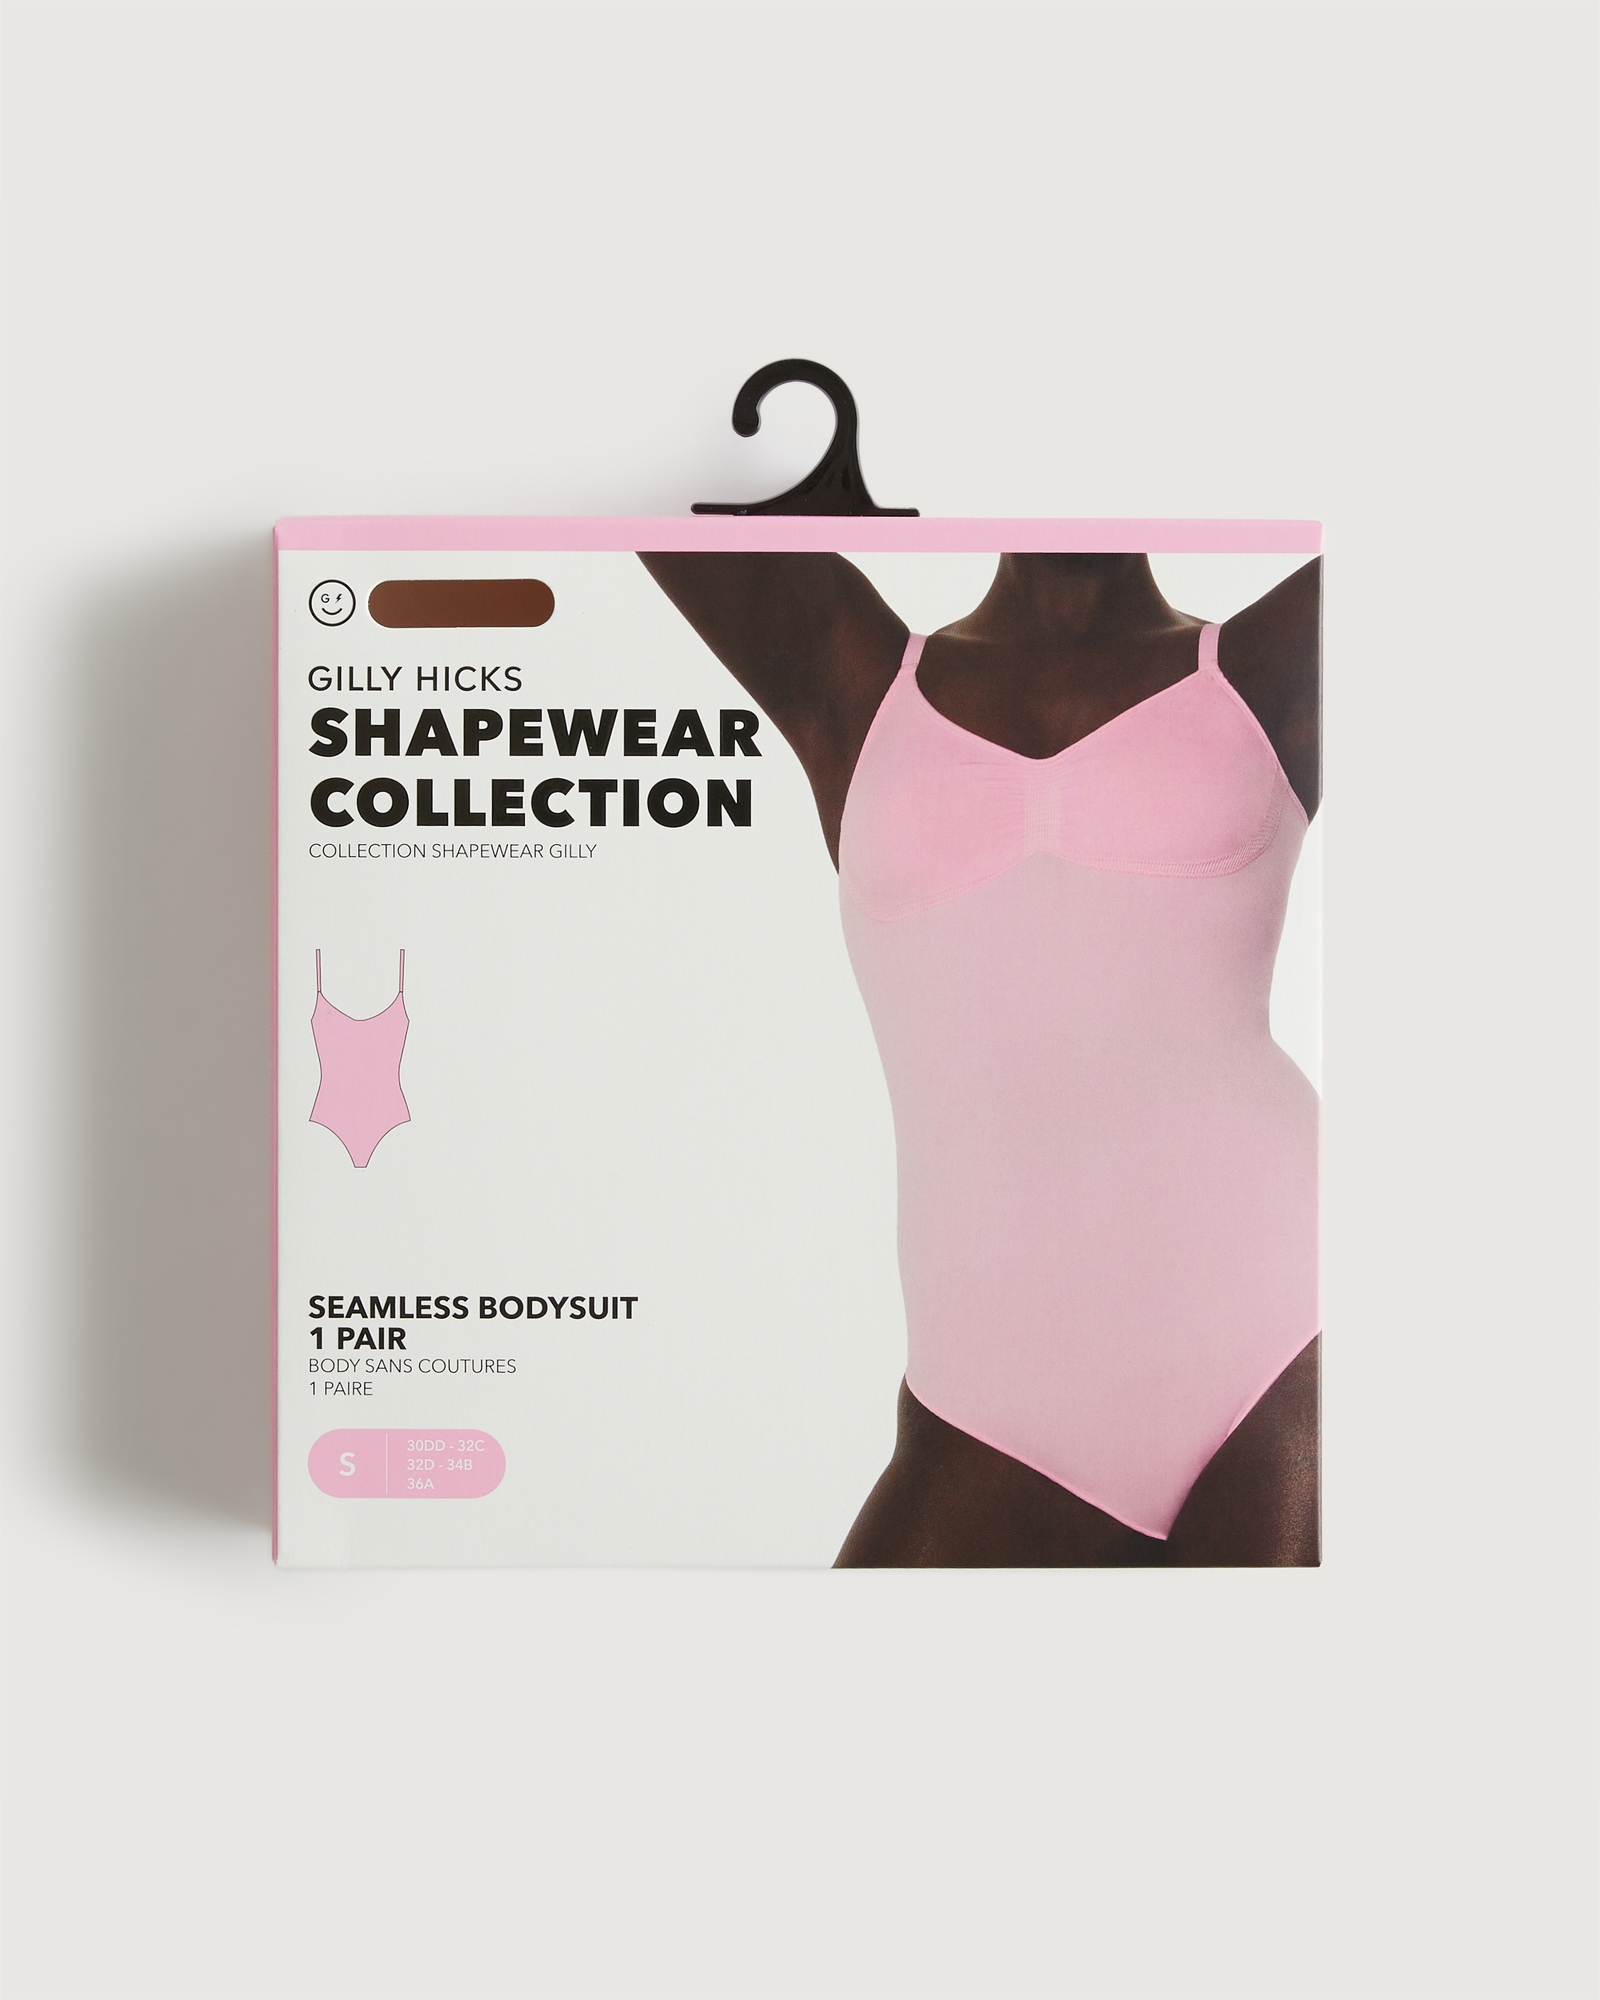 The girlies neeeed this bodysuit ‼️ #shapewear #shapewearbodysuit